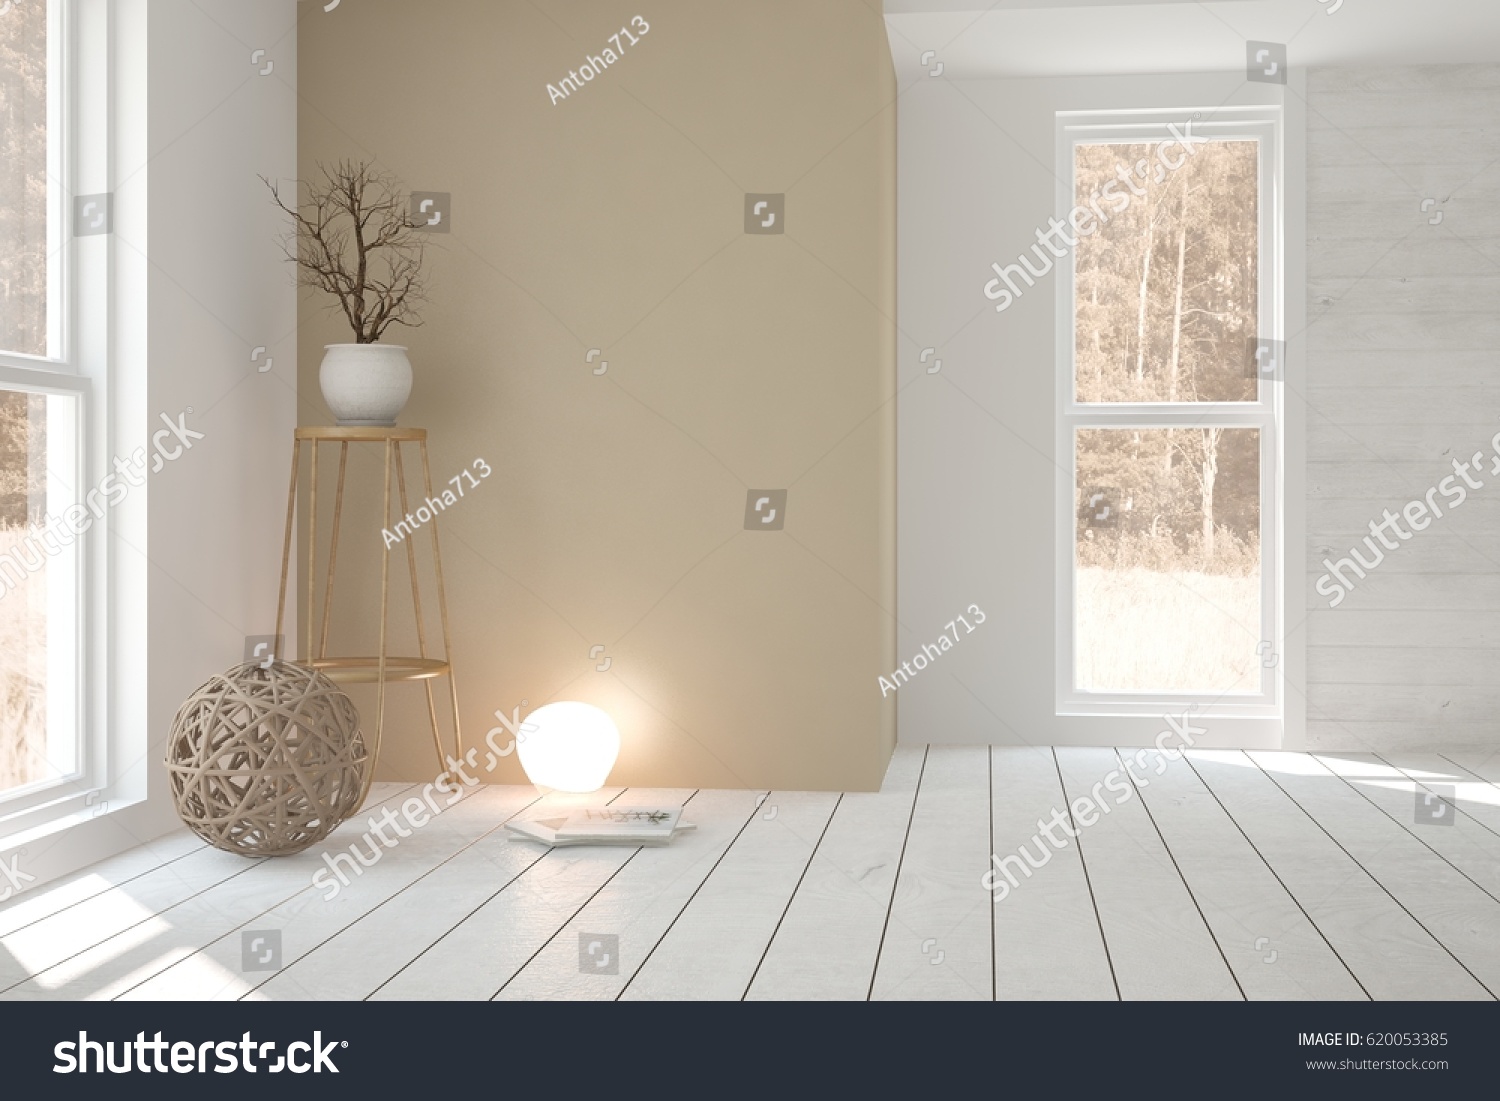 White empty room with vase. Scandinavian interior design. 3D illustration #620053385